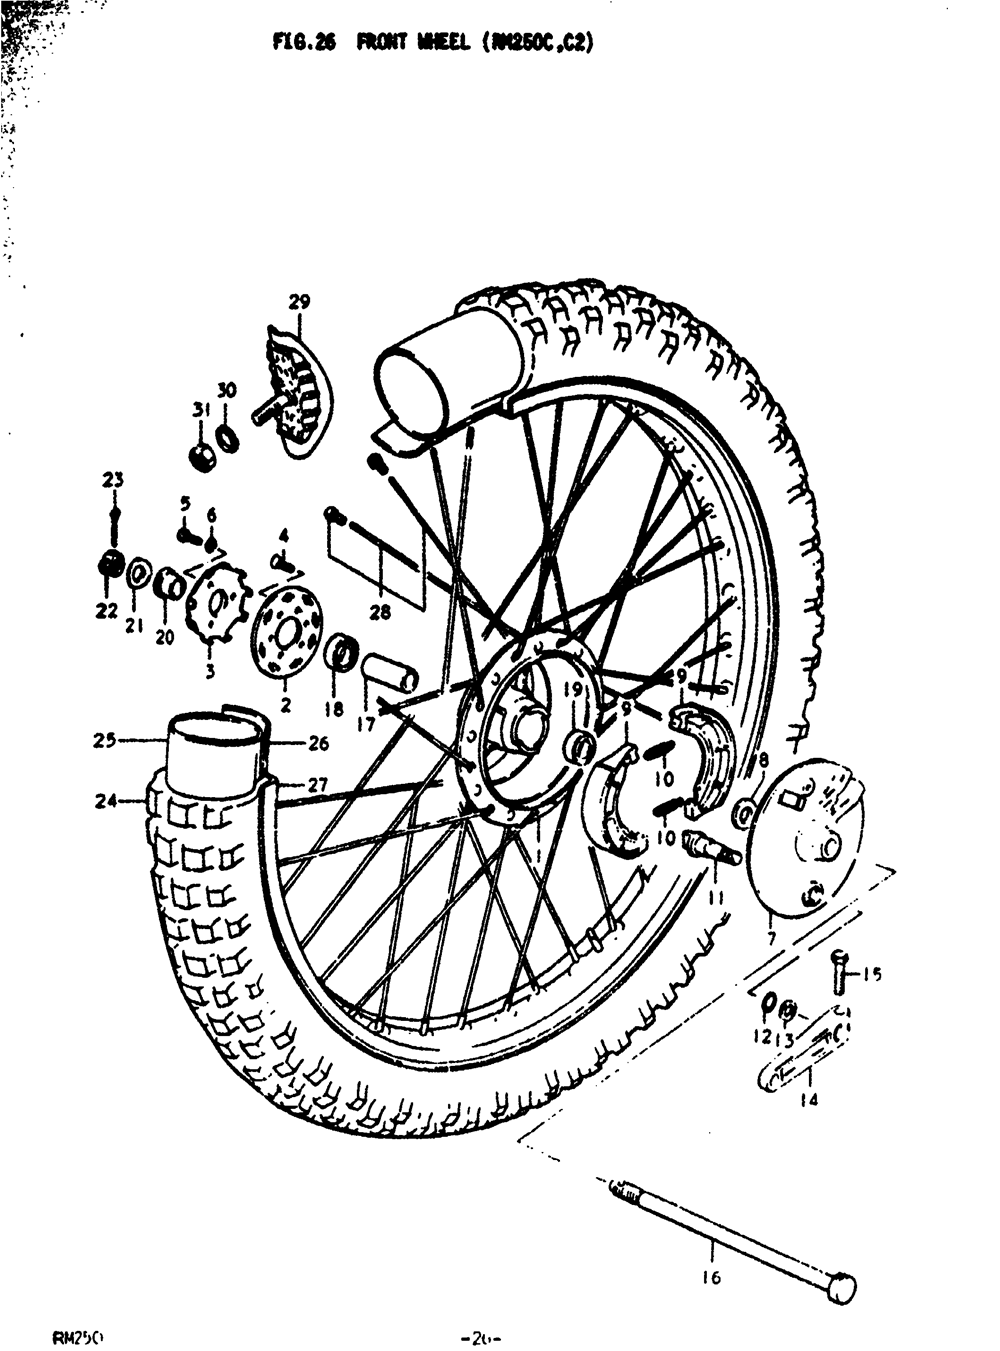 Front wheel (rm250c